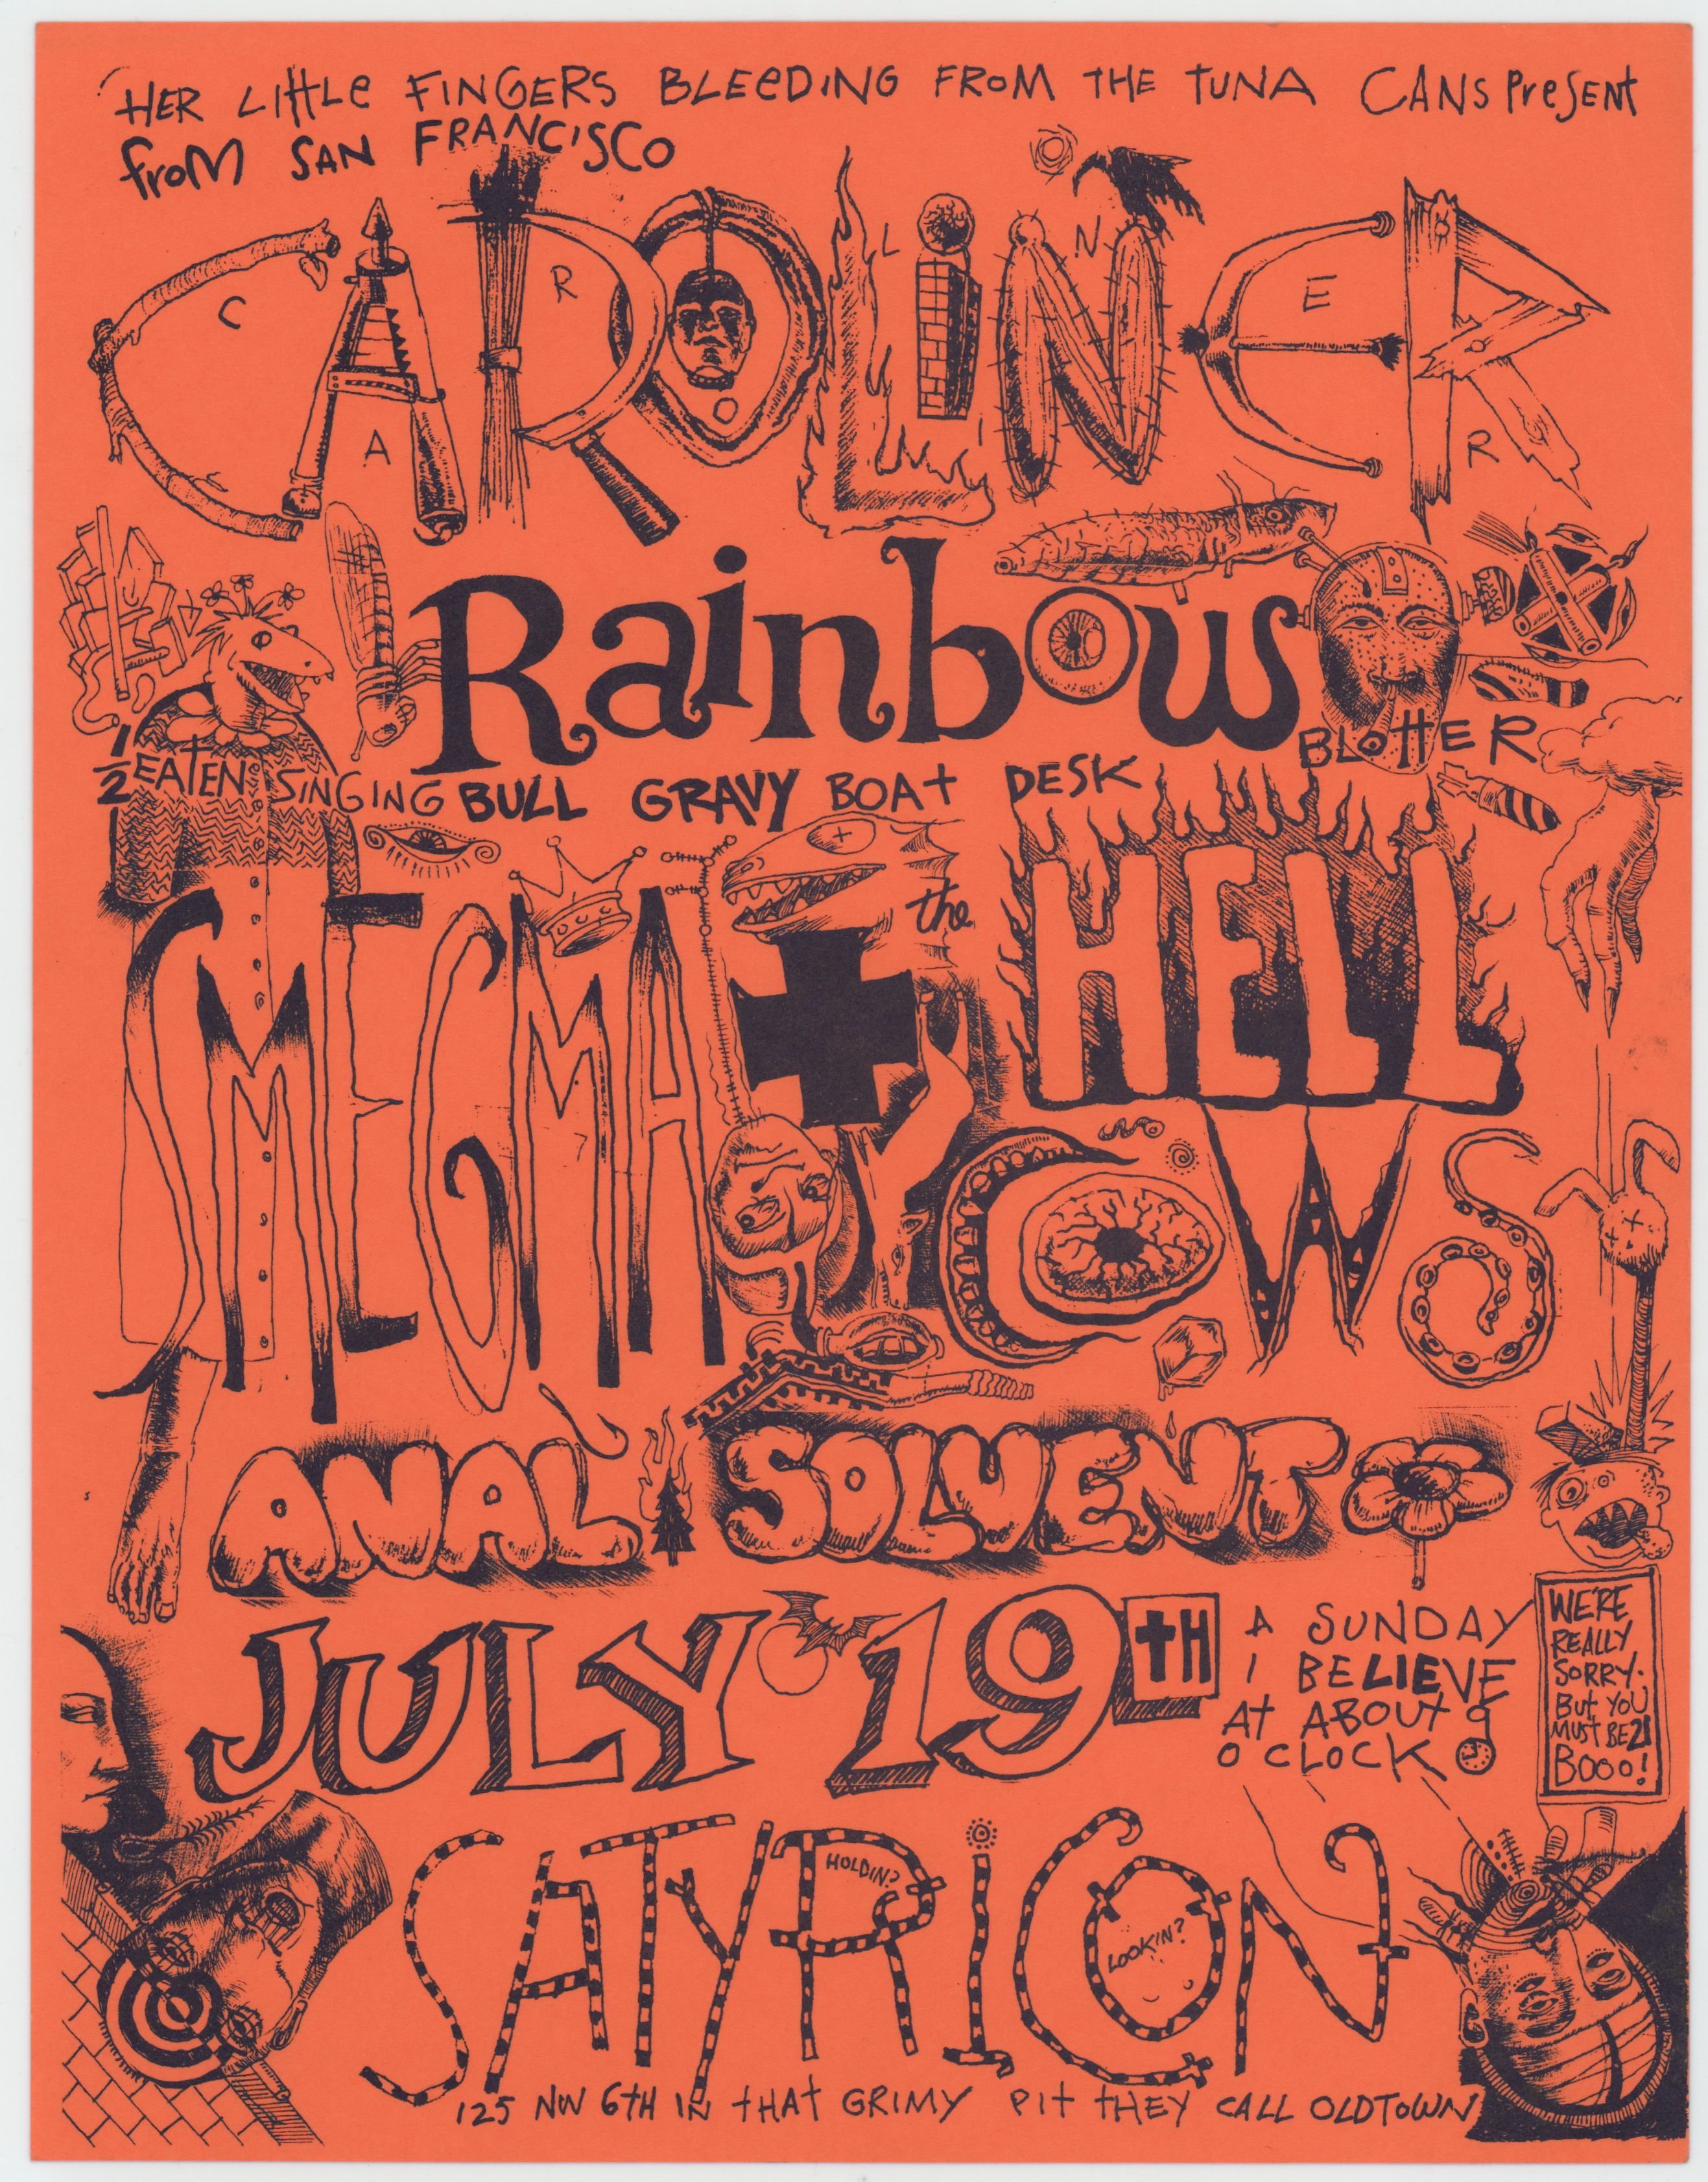 Caroliner Rainbow Satyricon 1000-07-19 1000 Satyricon Jul 19 Orange Concert Poster